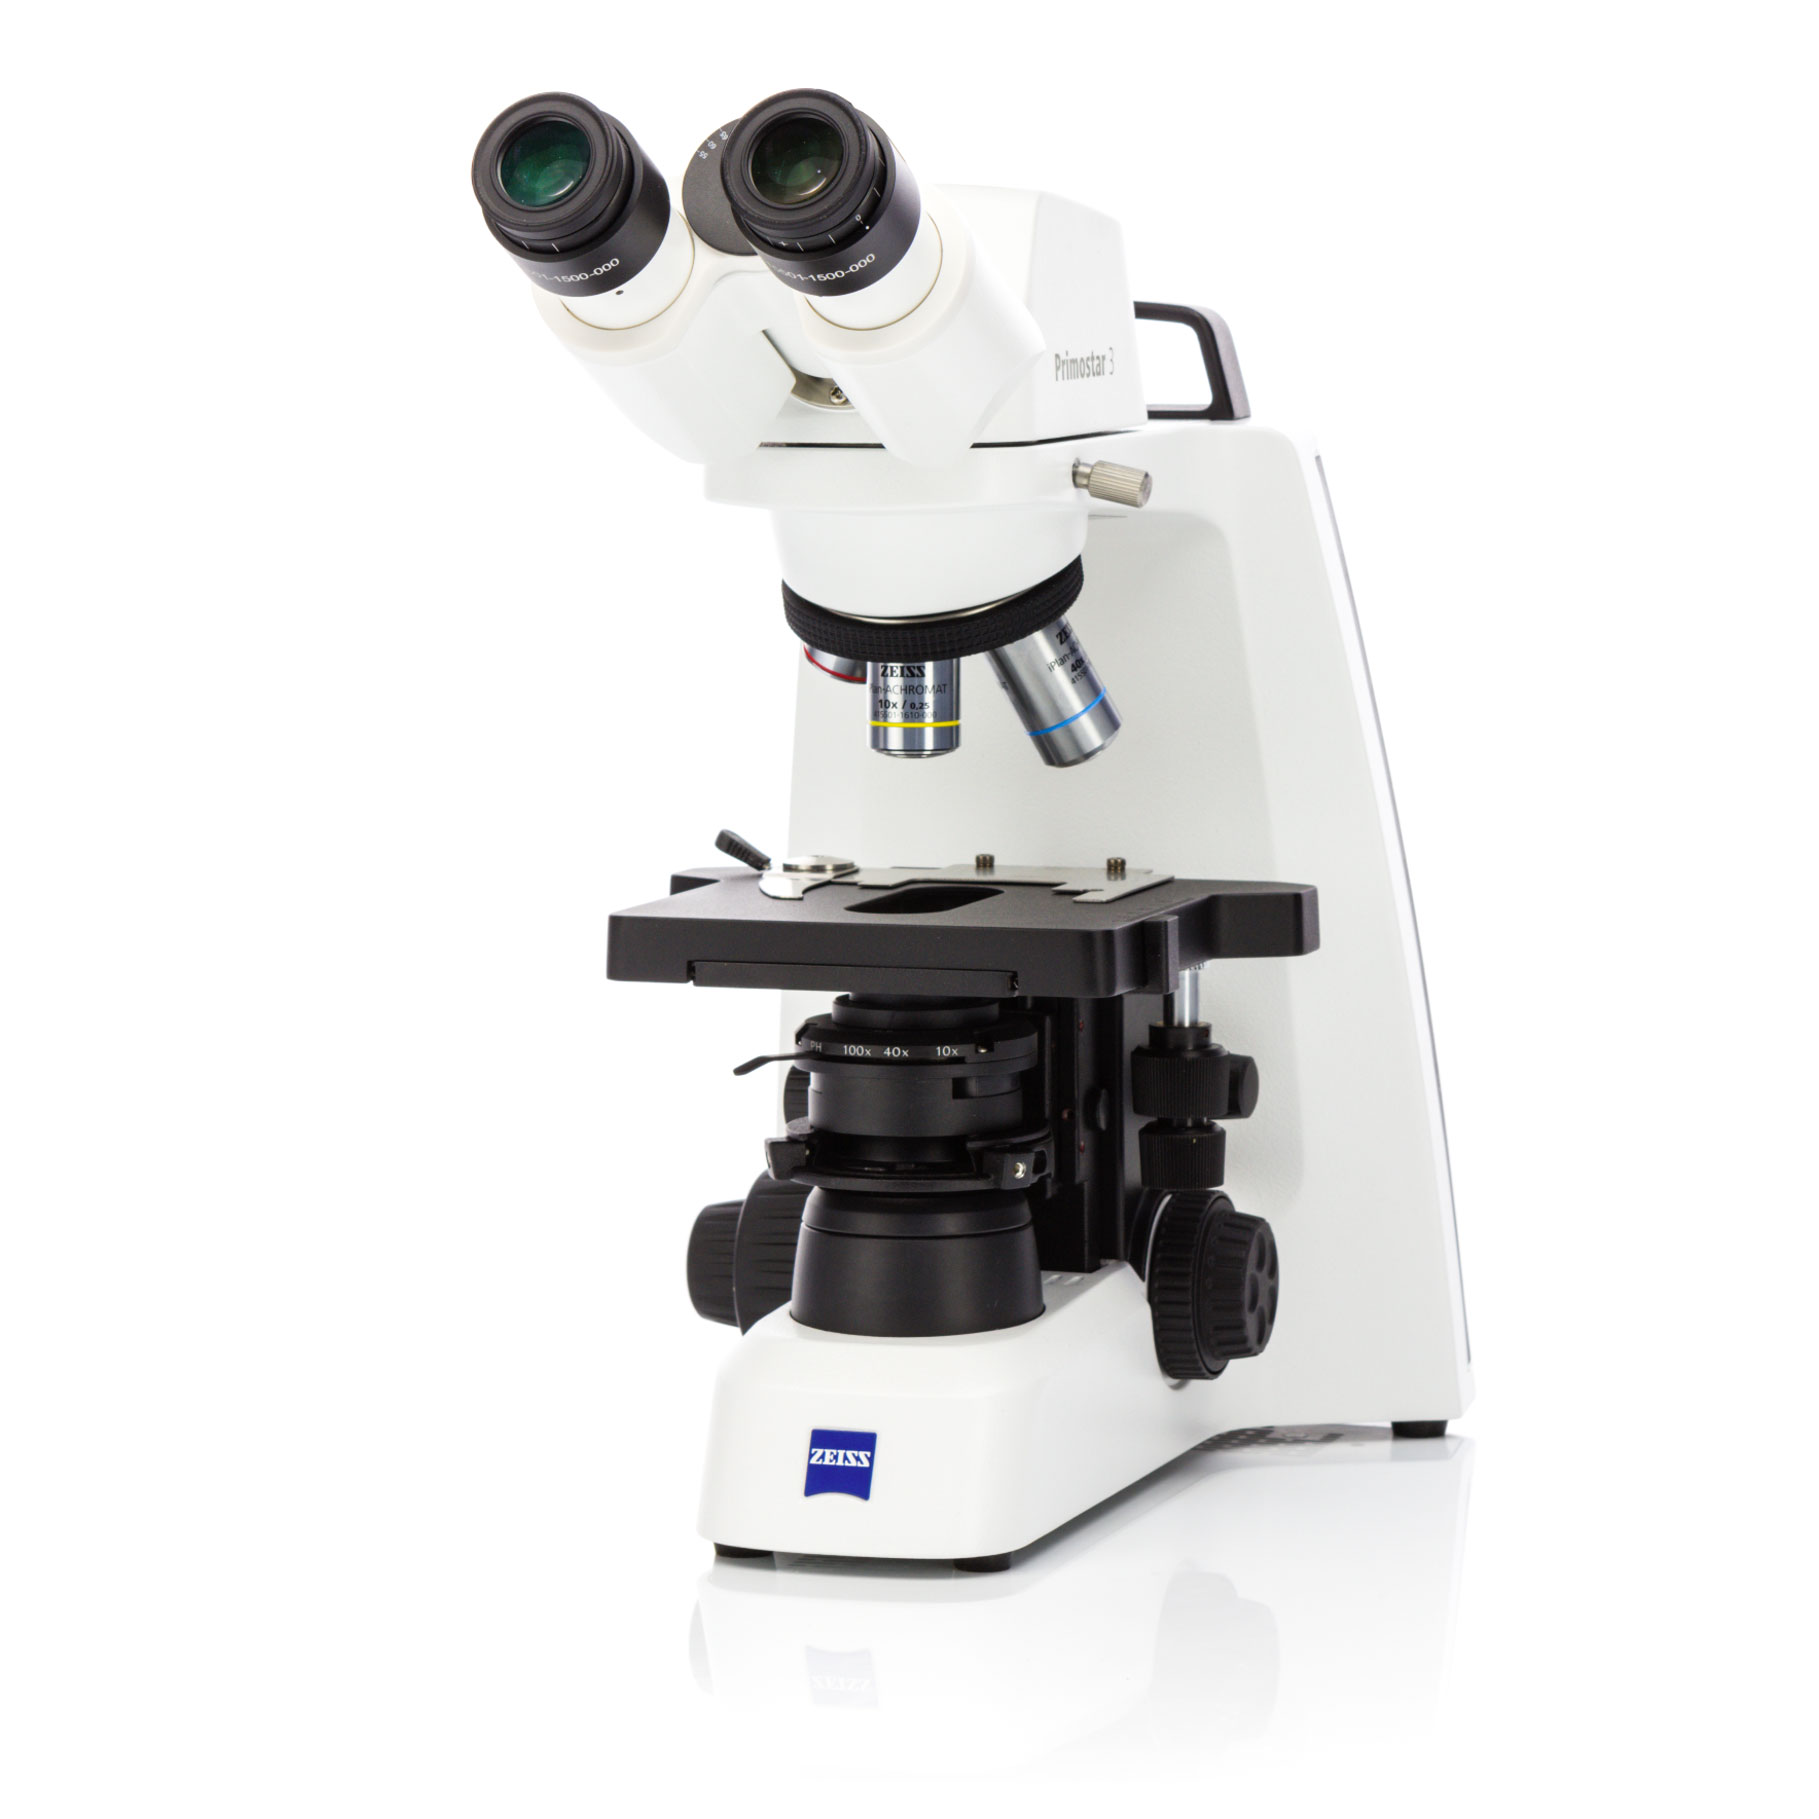 ZEISS Microscopy Online Campus